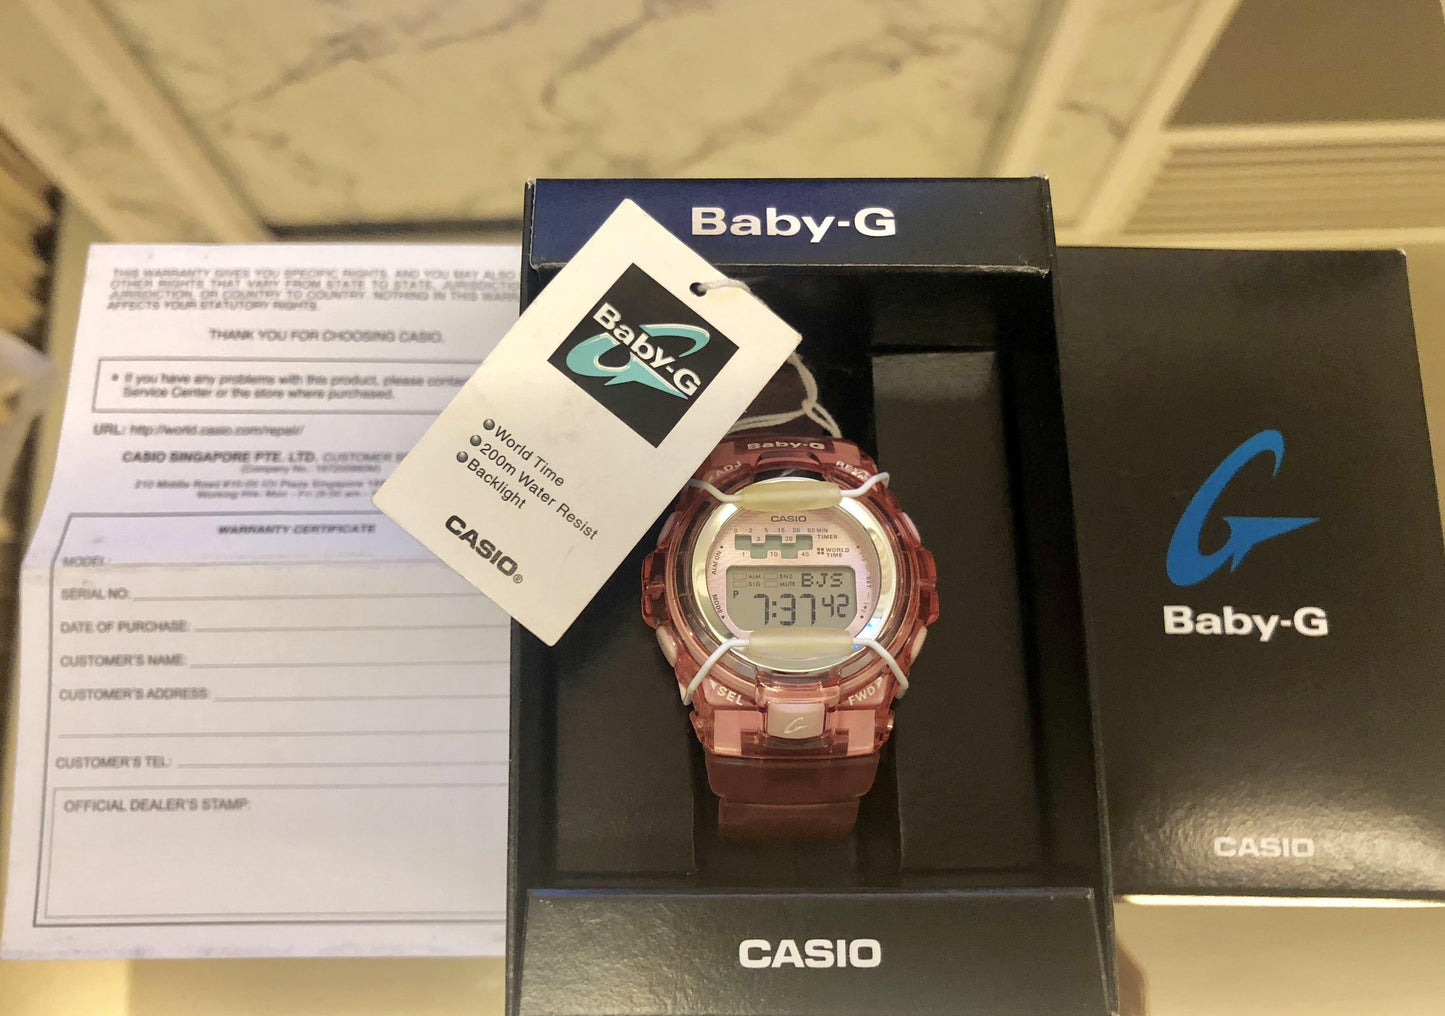 Casio Baby-G Retrograde Digital Pink Watch BG1001-4AVDR - Diligence1International